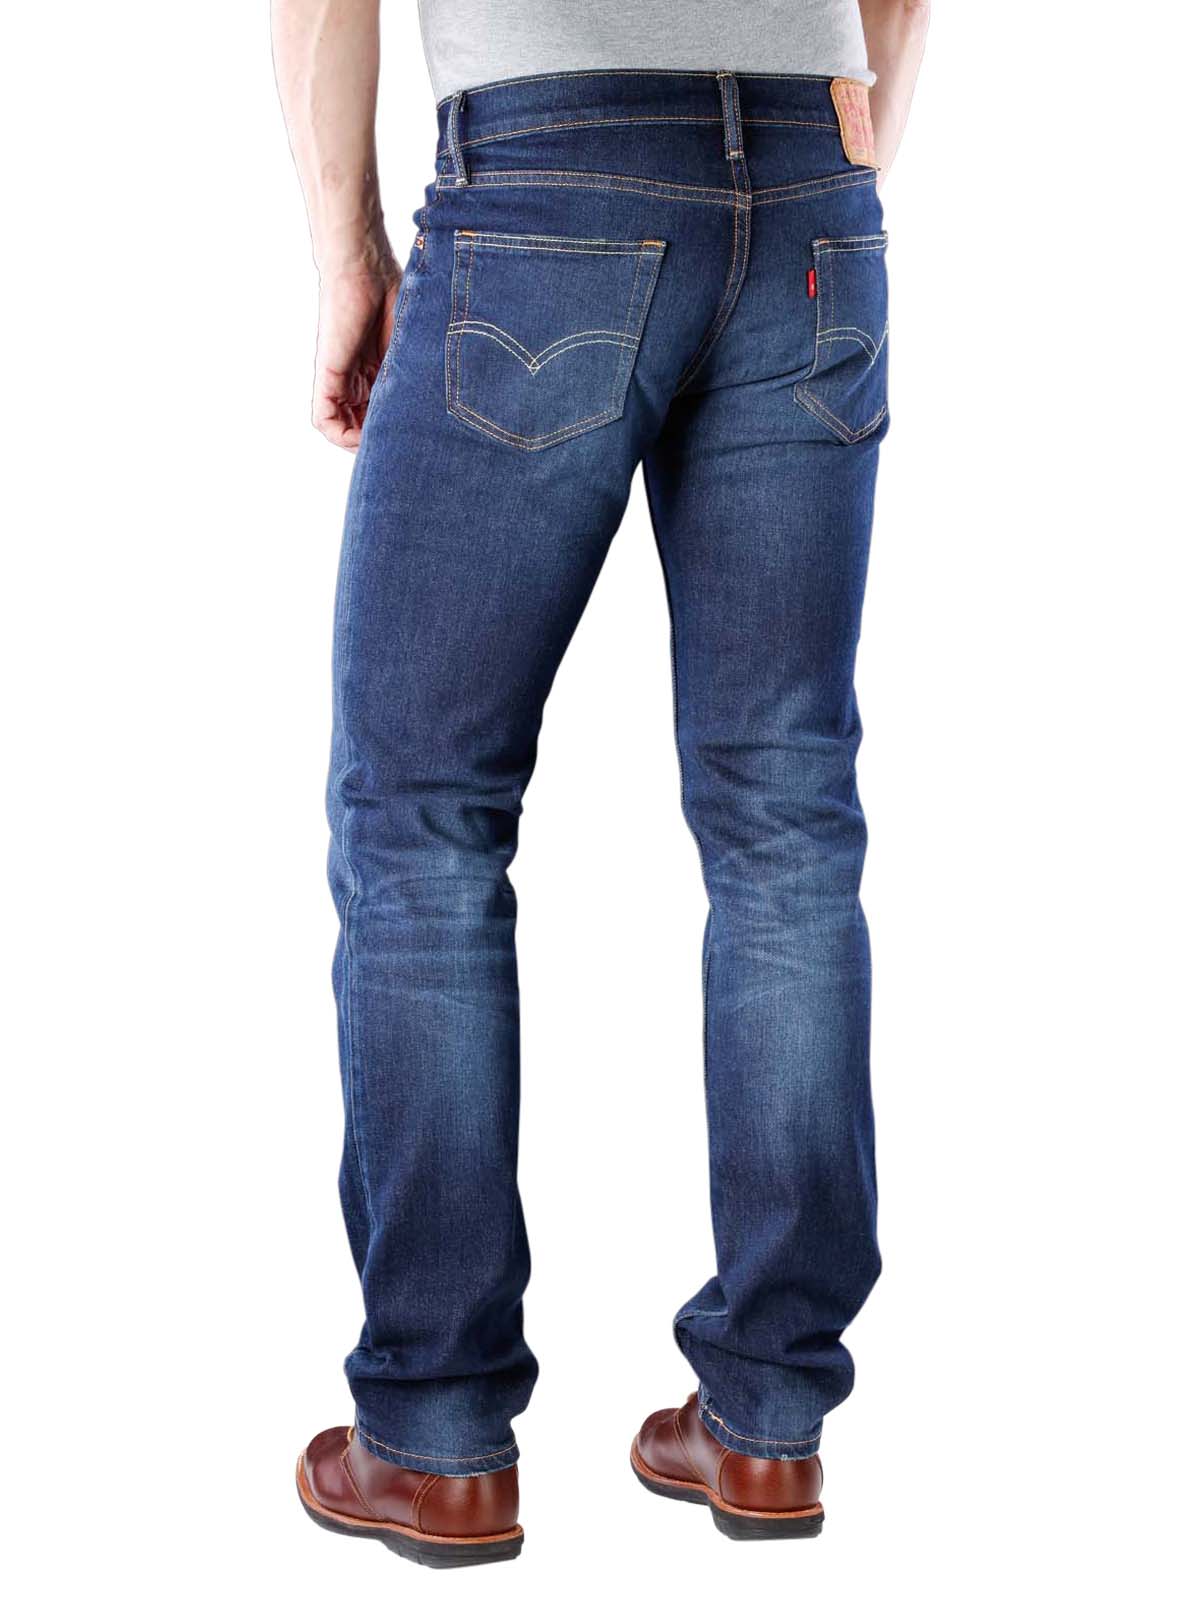 Levis 511 Men Jeans Inspiration | Dimensional Thinking Fashion